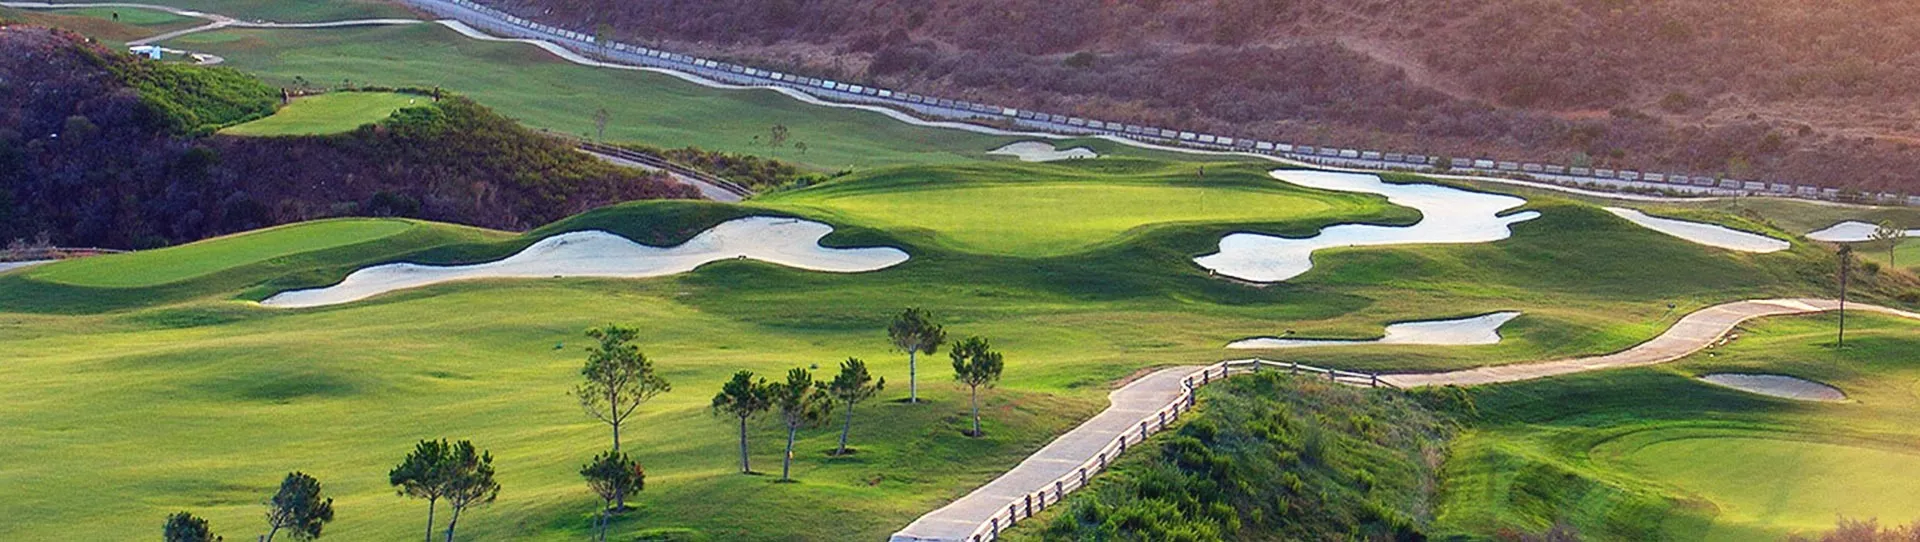 Spain golf courses - Calanova Golf Course - Photo 1